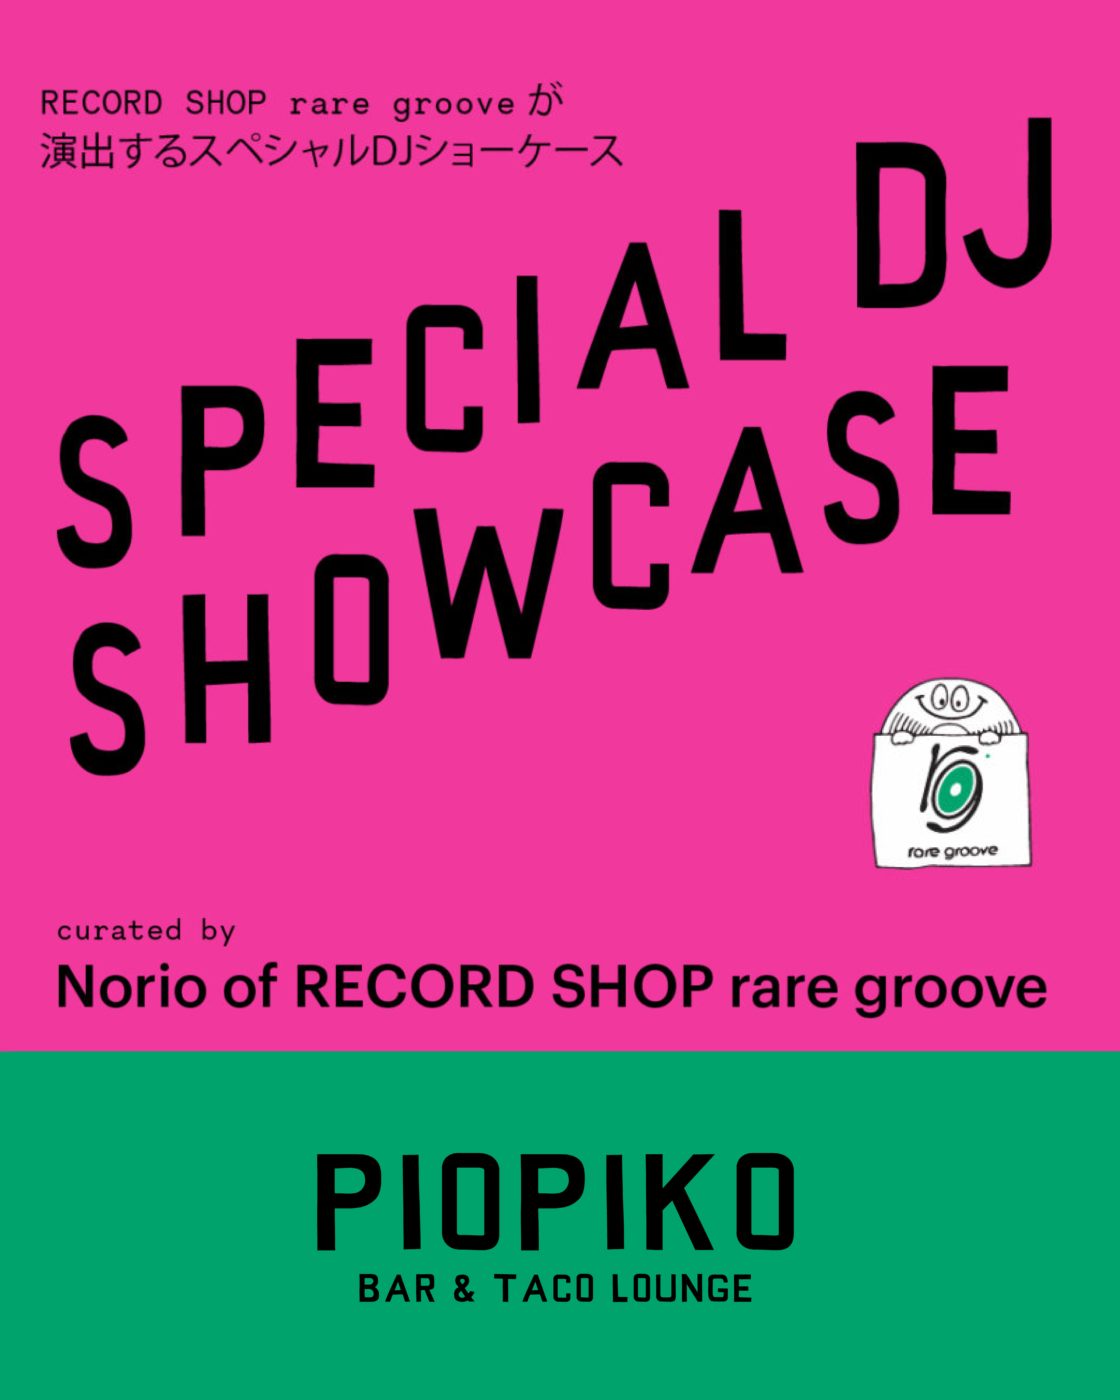 Special DJ Showcase promo